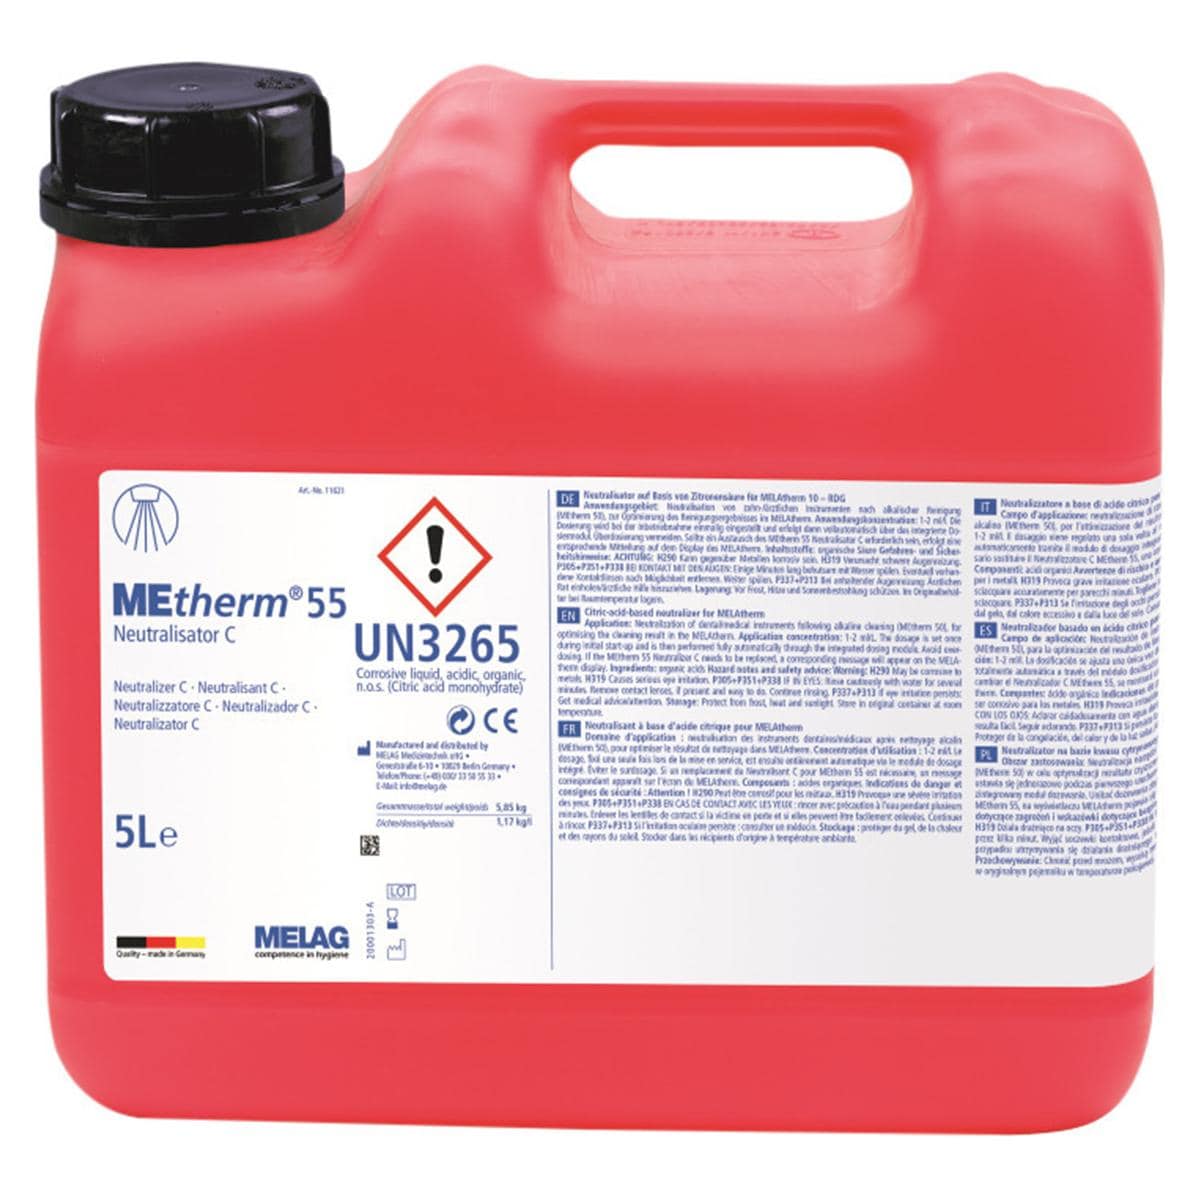 MEtherm 55 neutralisator C - can 5 liter